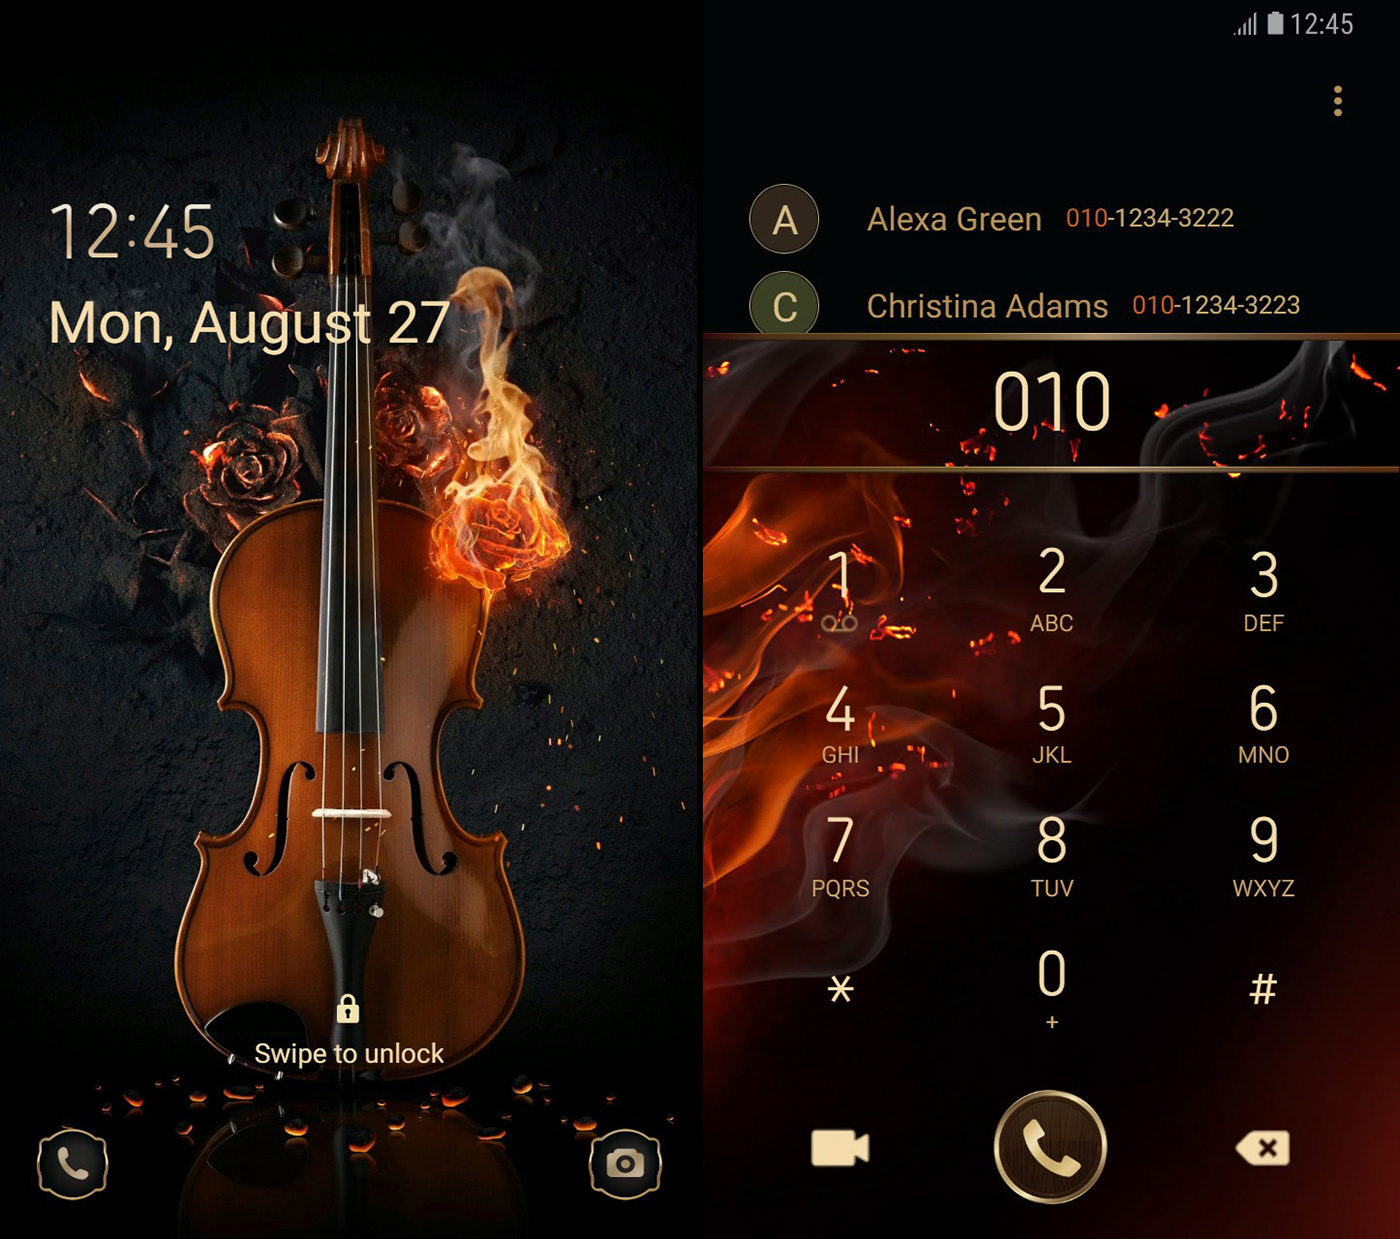 burining drama fire mobile theme music passion rose samsung galaxy smartphone Violin